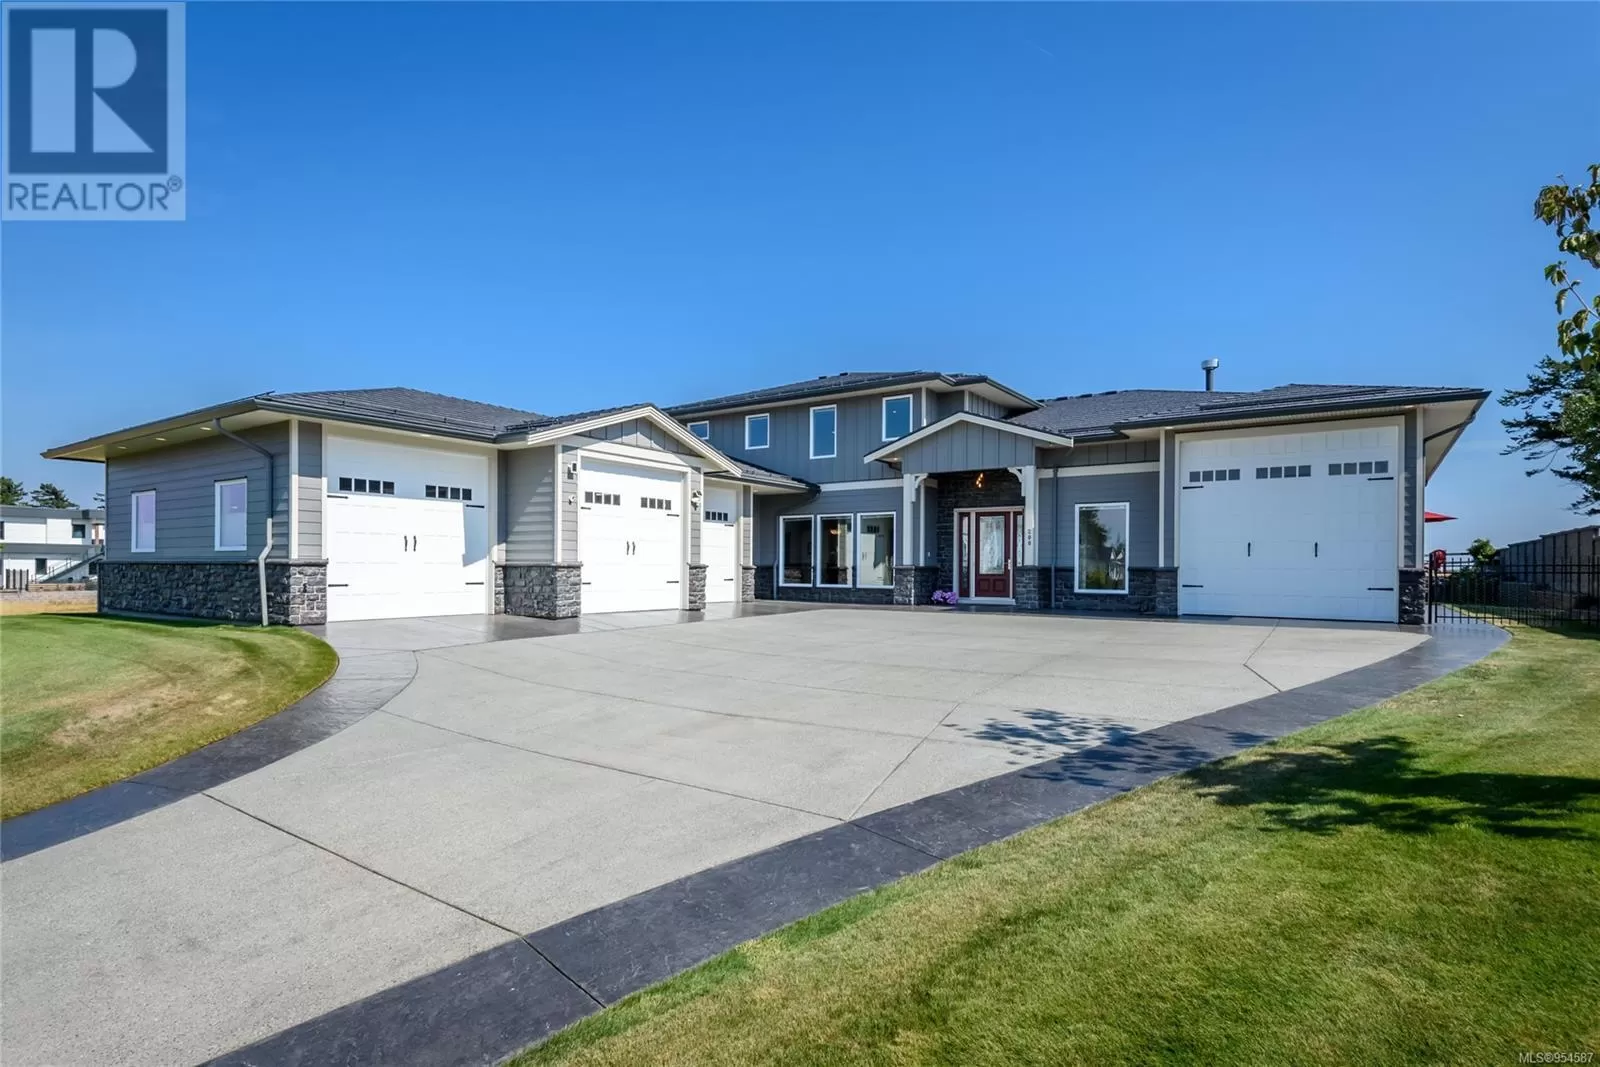 House for rent: 200 Connemara Rd, Comox, British Columbia V9M 3T4